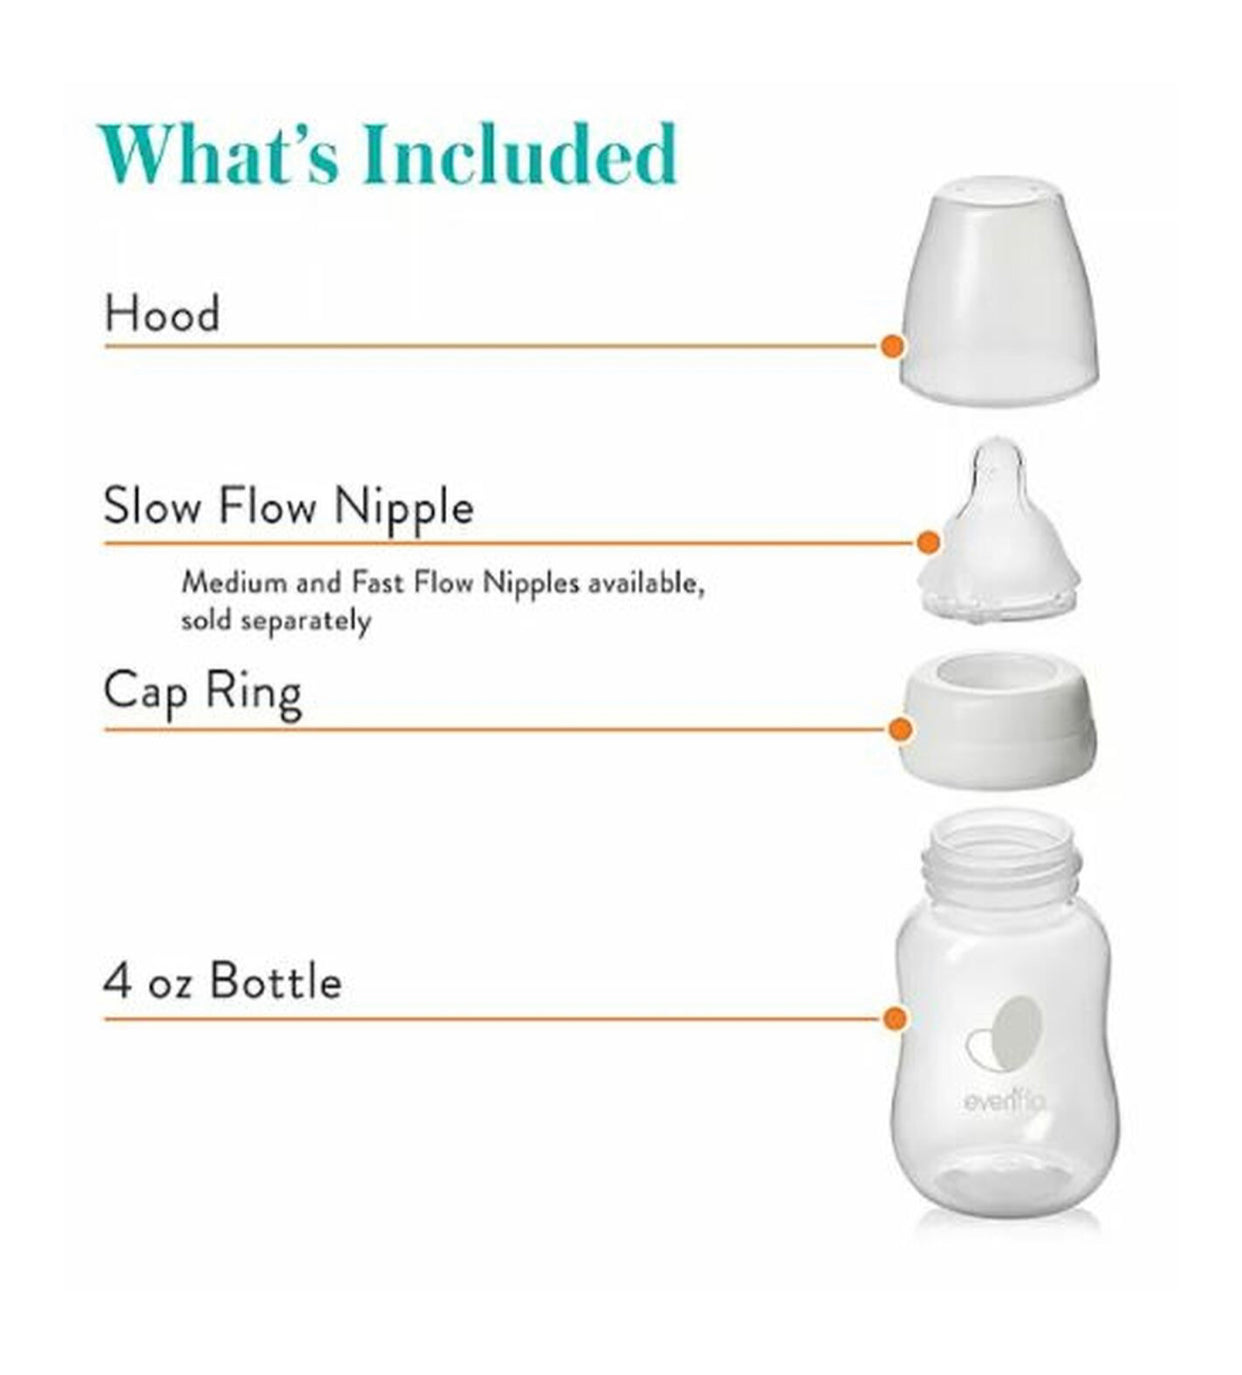 Evenflo Balance+ Standard Bottles, 4oz, Slow Flow Nipple